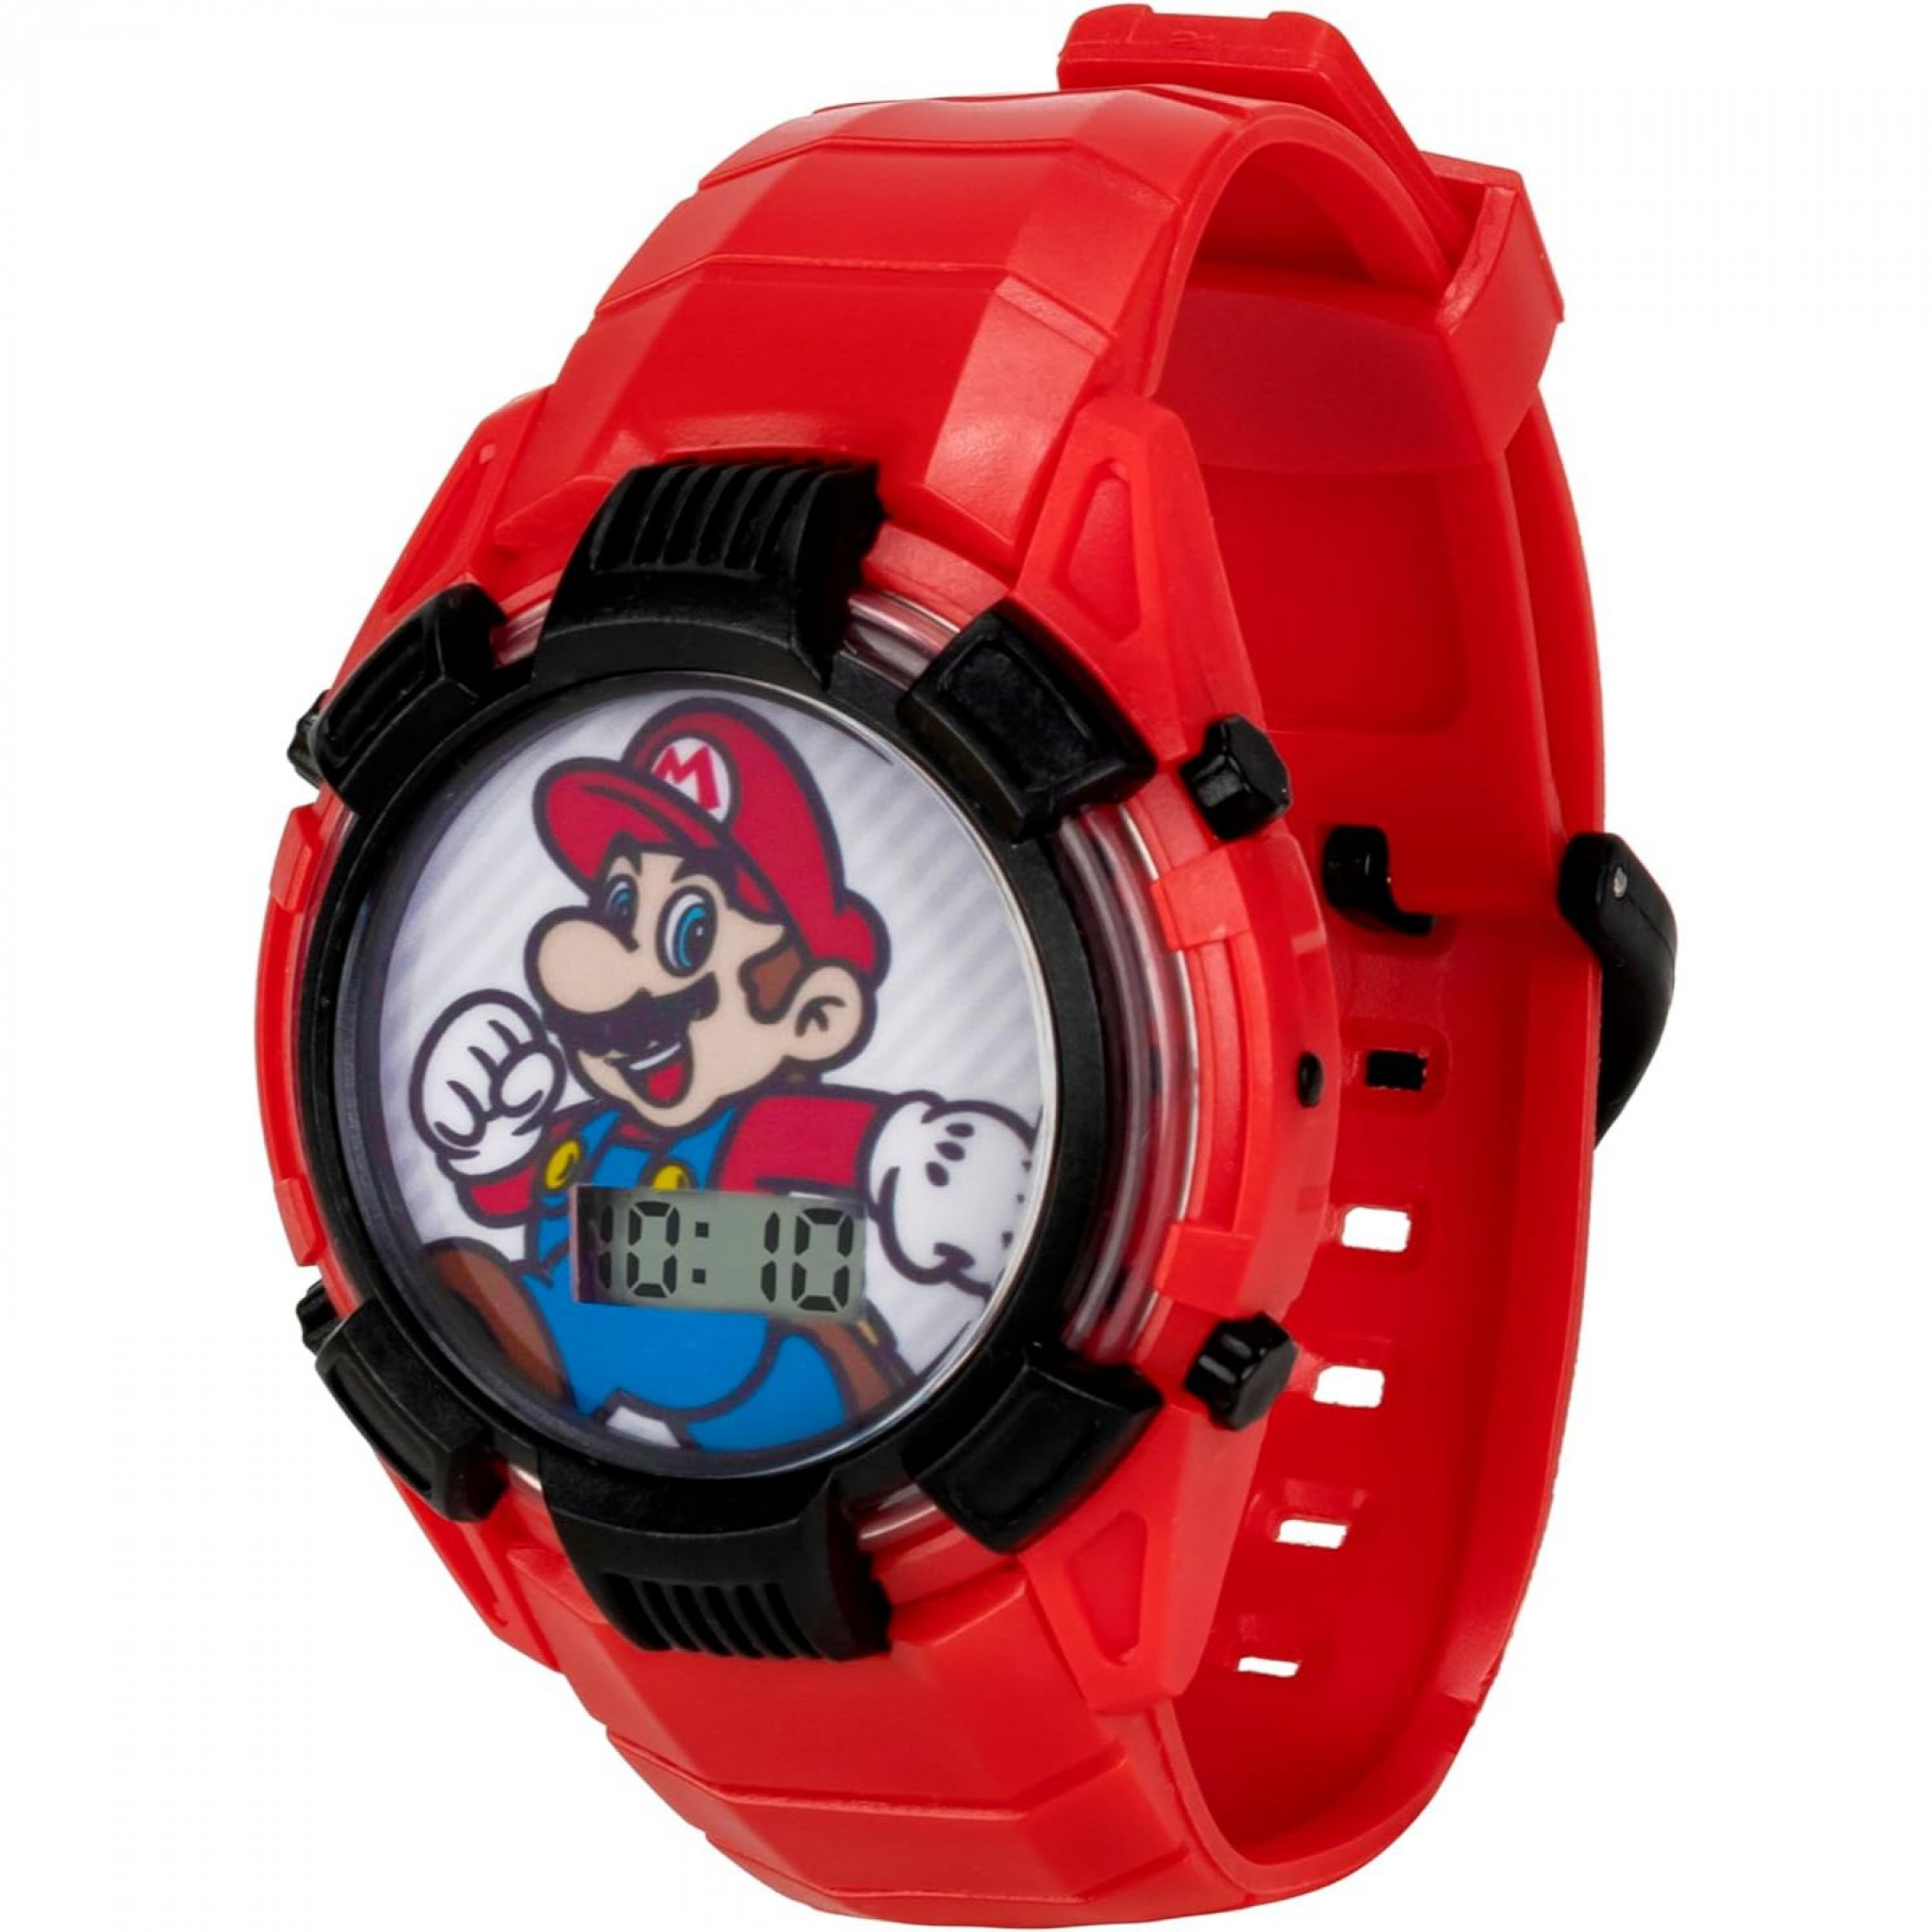 Super Mario Bros. Jump Digital Flashing LCD Kid's Watch